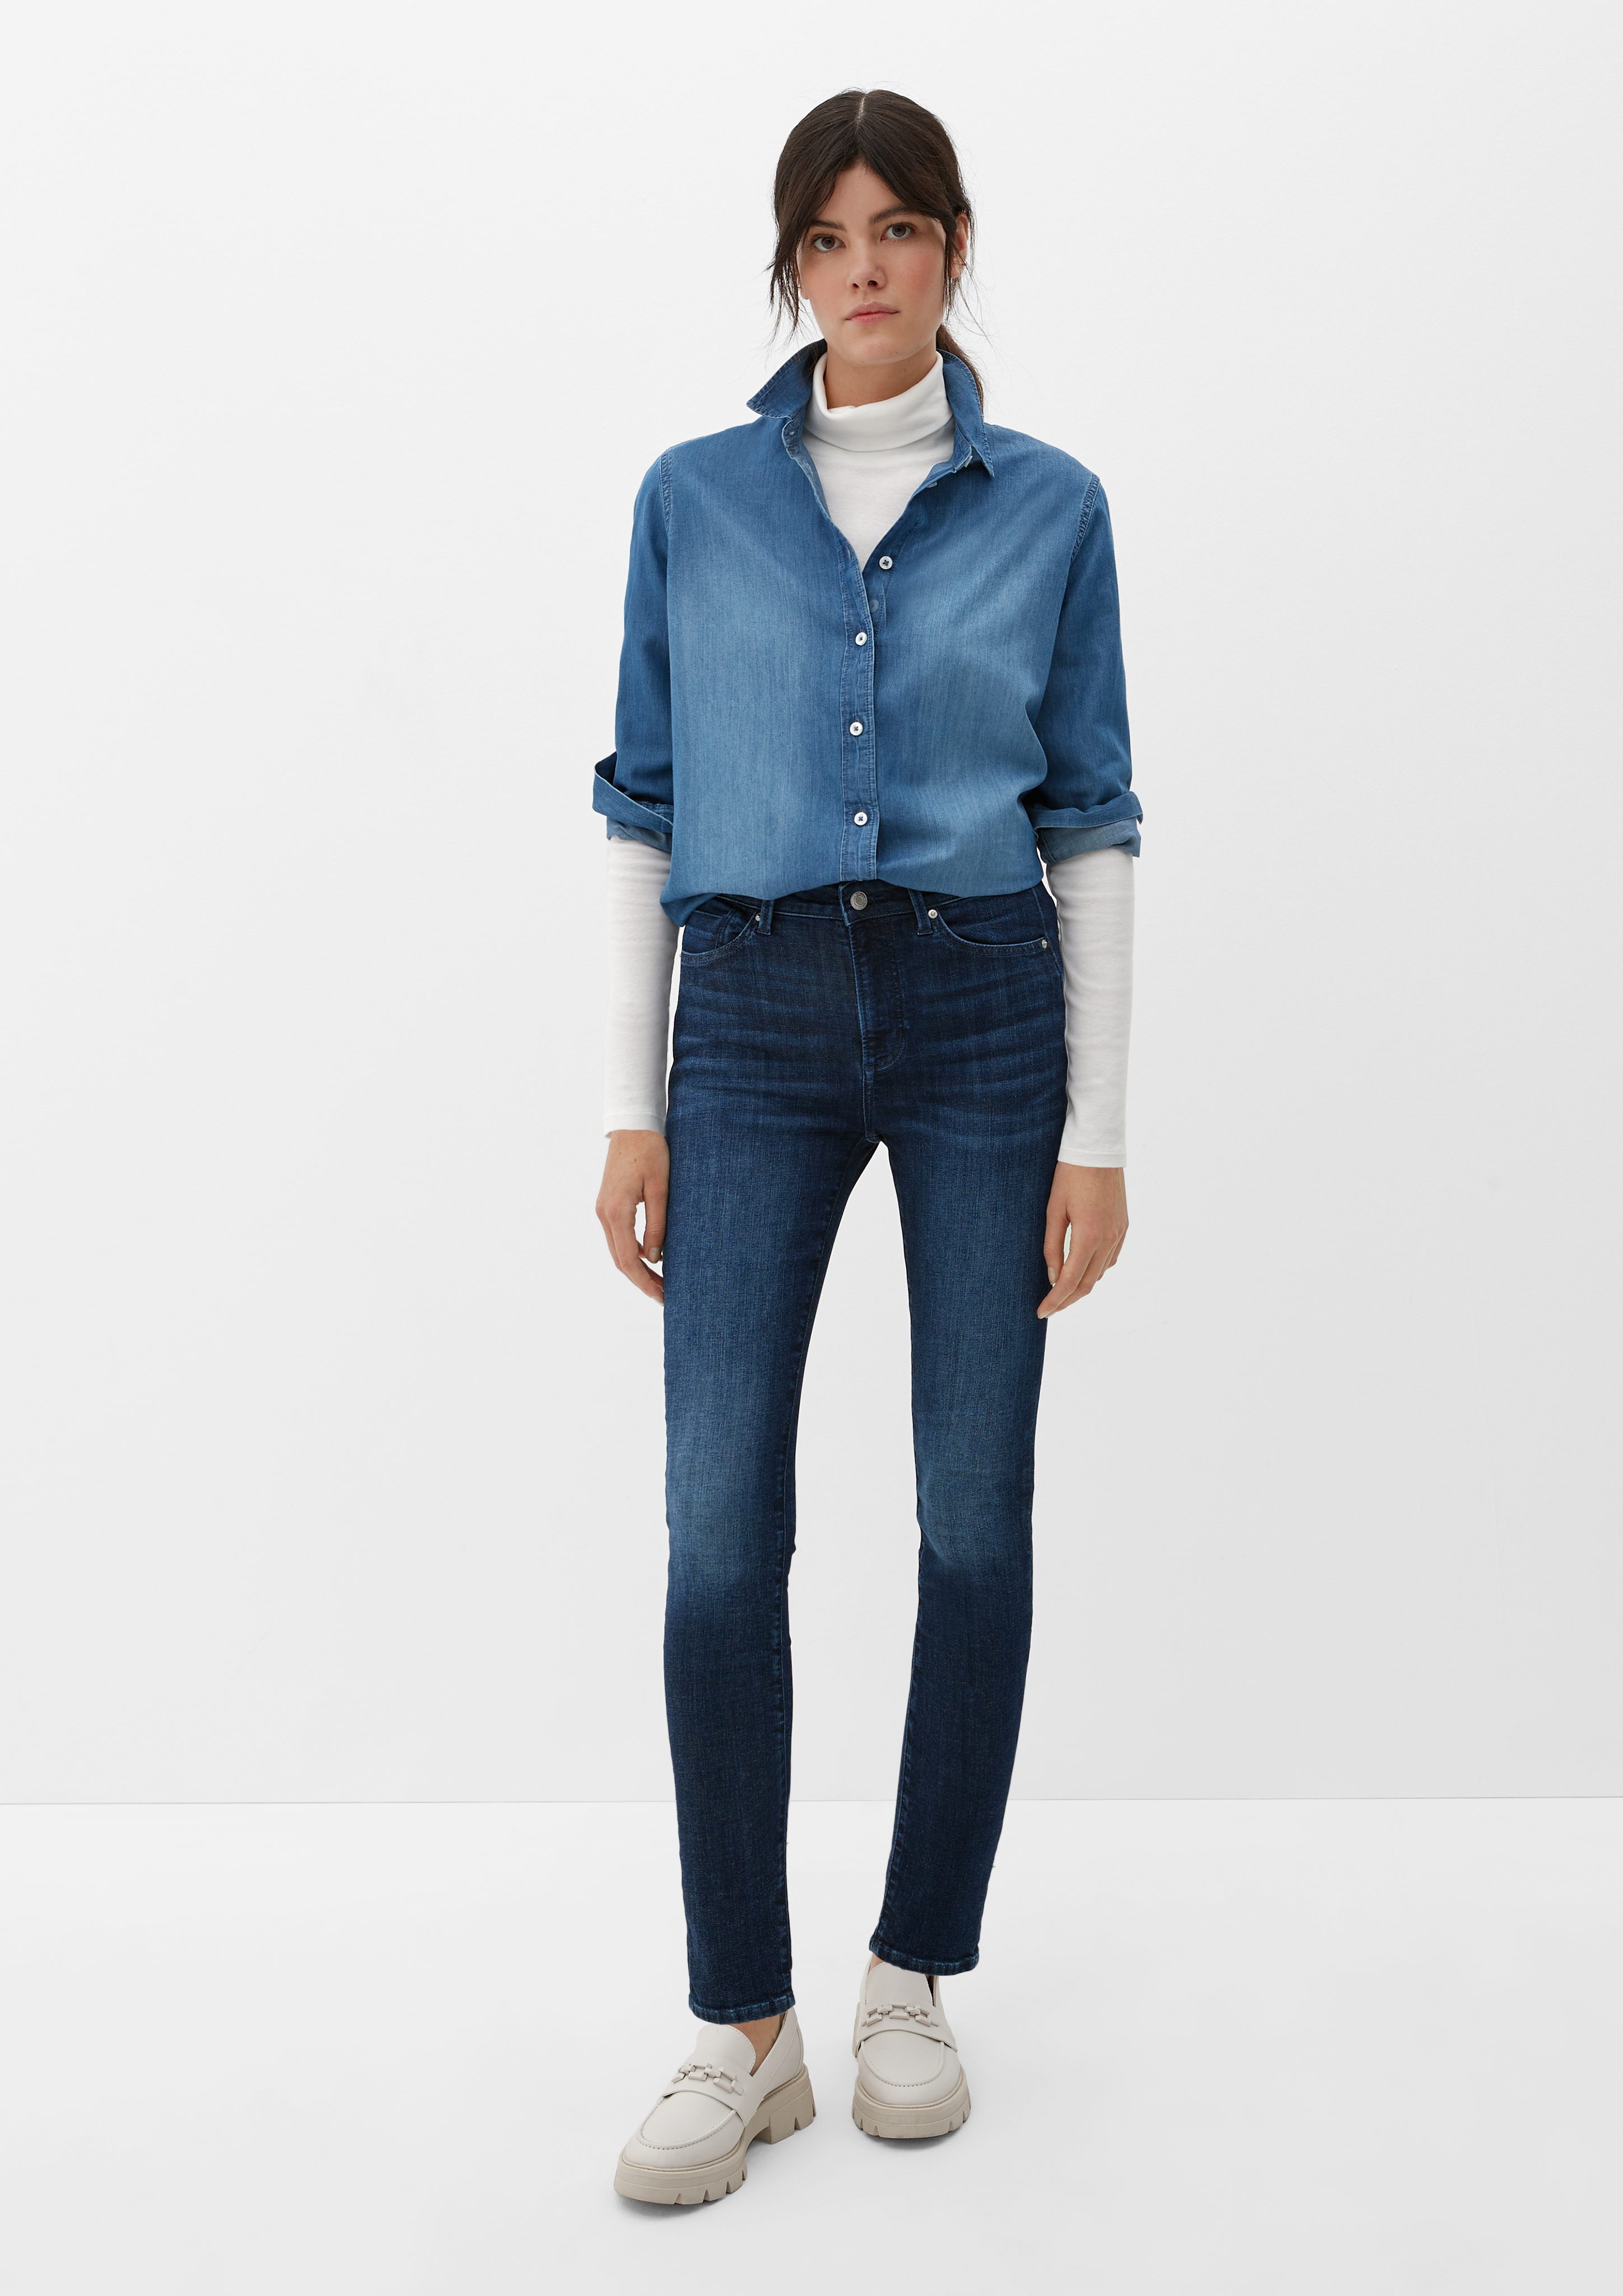 / Skinny / Skinny Leg Rise / dunkelblau Jeans 5-Pocket-Jeans s.Oliver High Izabell Fit Waschung